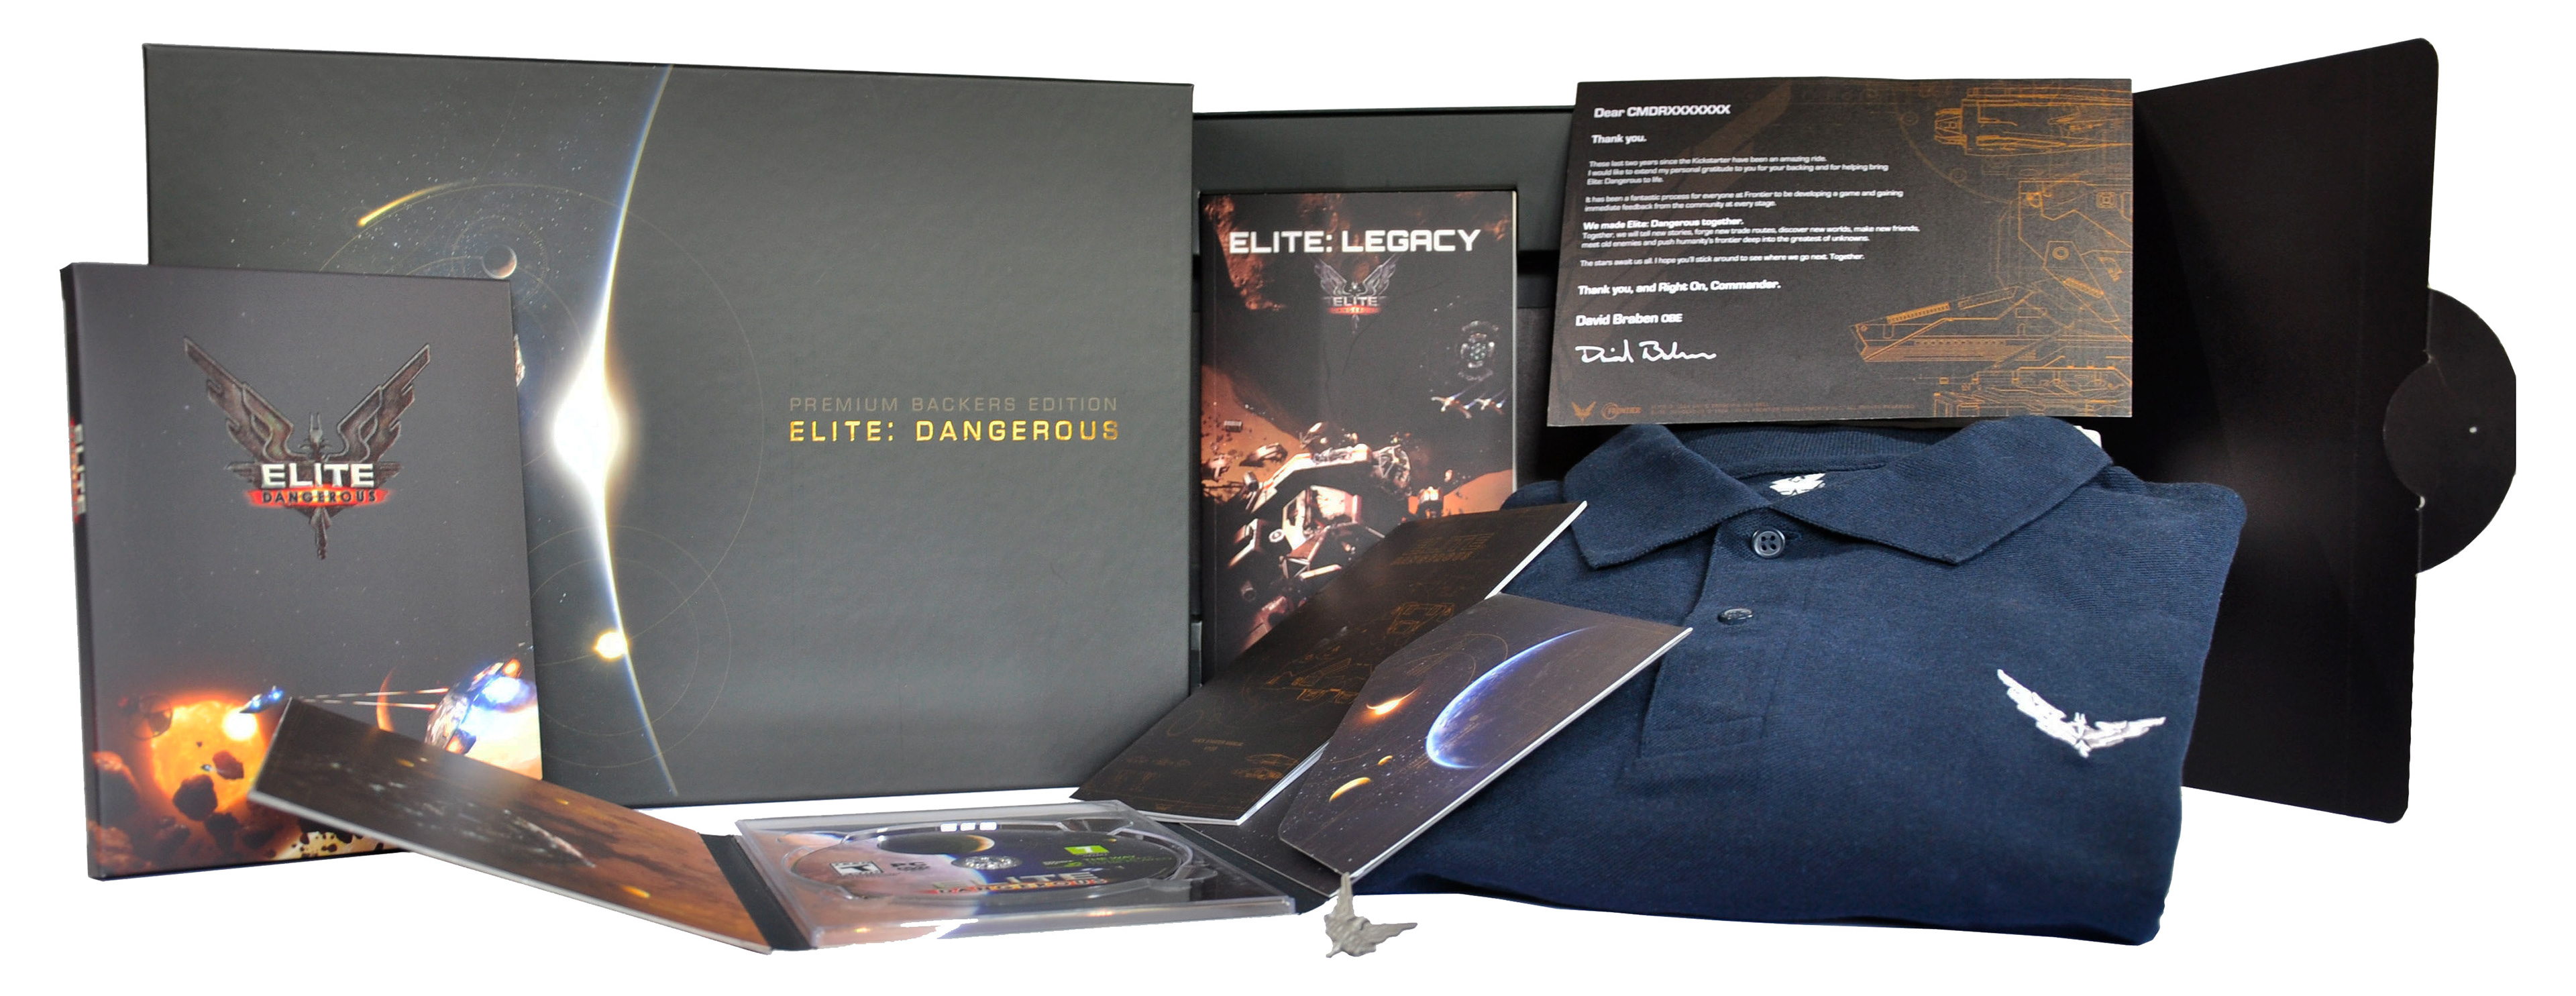 Elite: Dangerous by Frontier Developments — Kickstarter